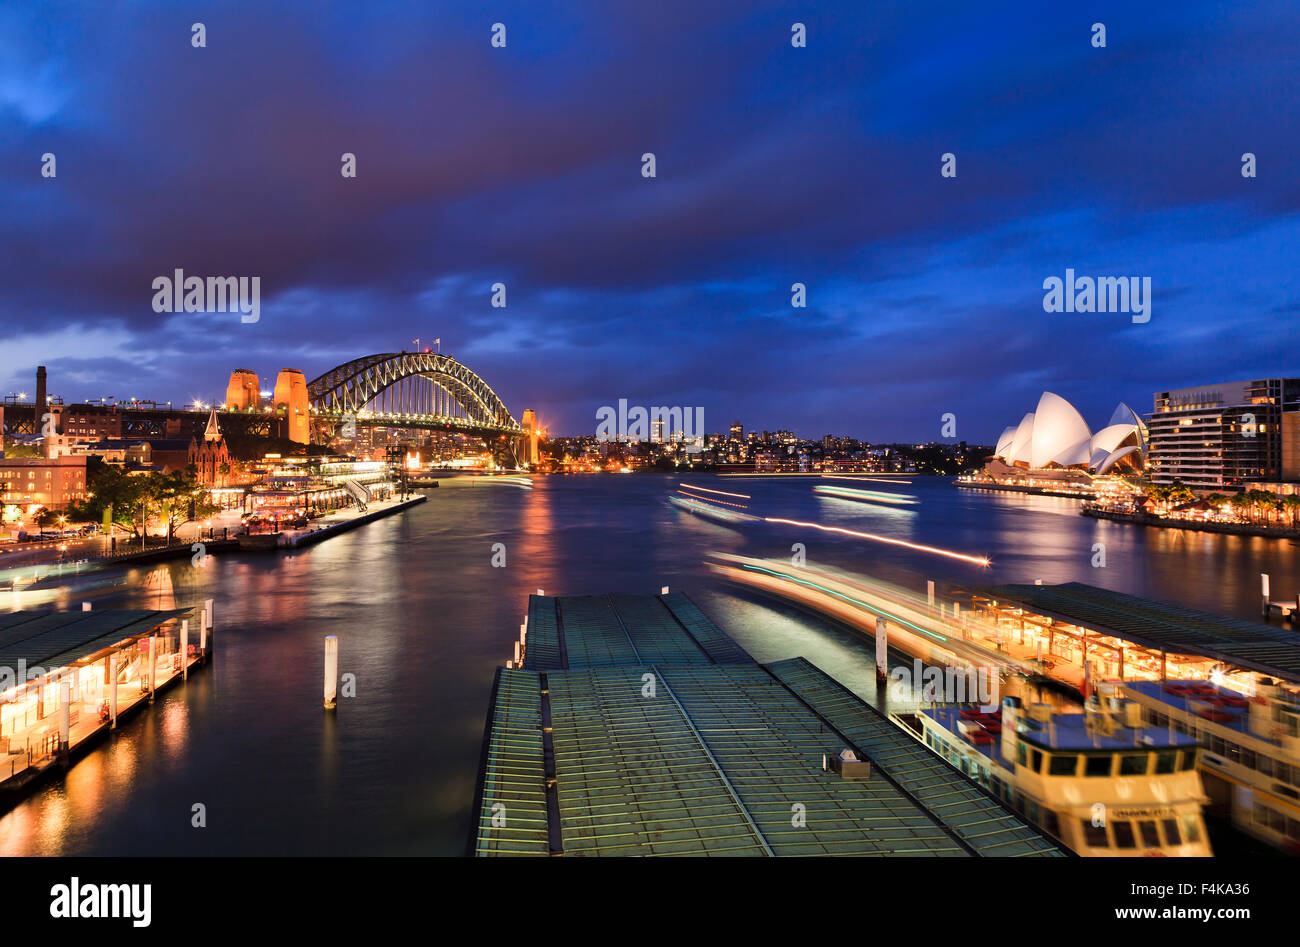 Australia Sydney major city landmark - circular quay at sunset view towards Harbour Bridge and passenger ferries Stock Photo